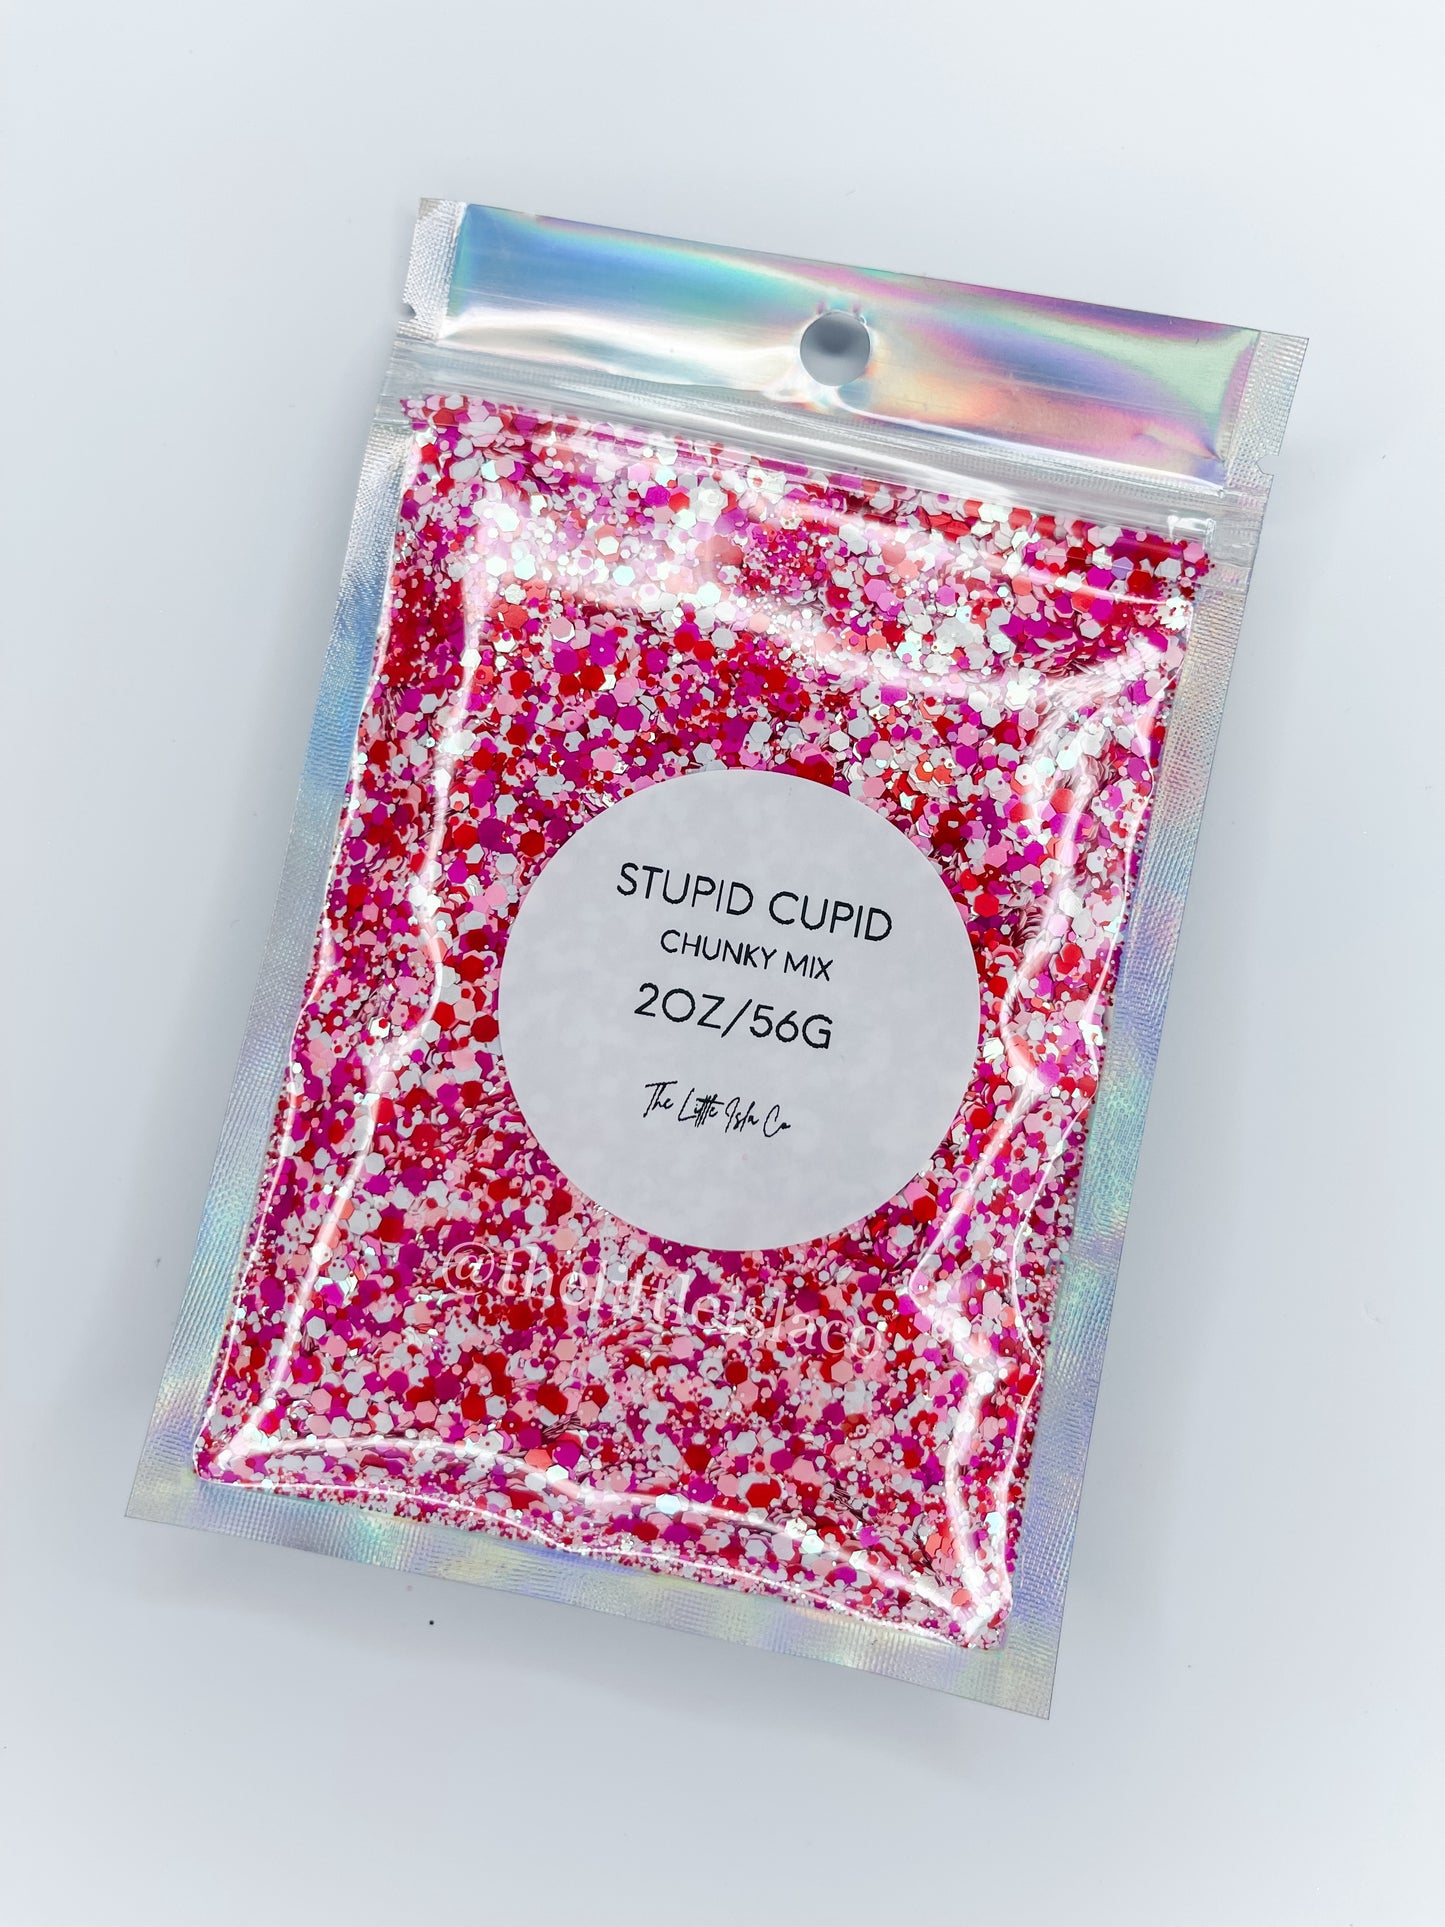 Chunky Glitter Mix - ‘Stupid Cupid’ - 2oz/56g Pack